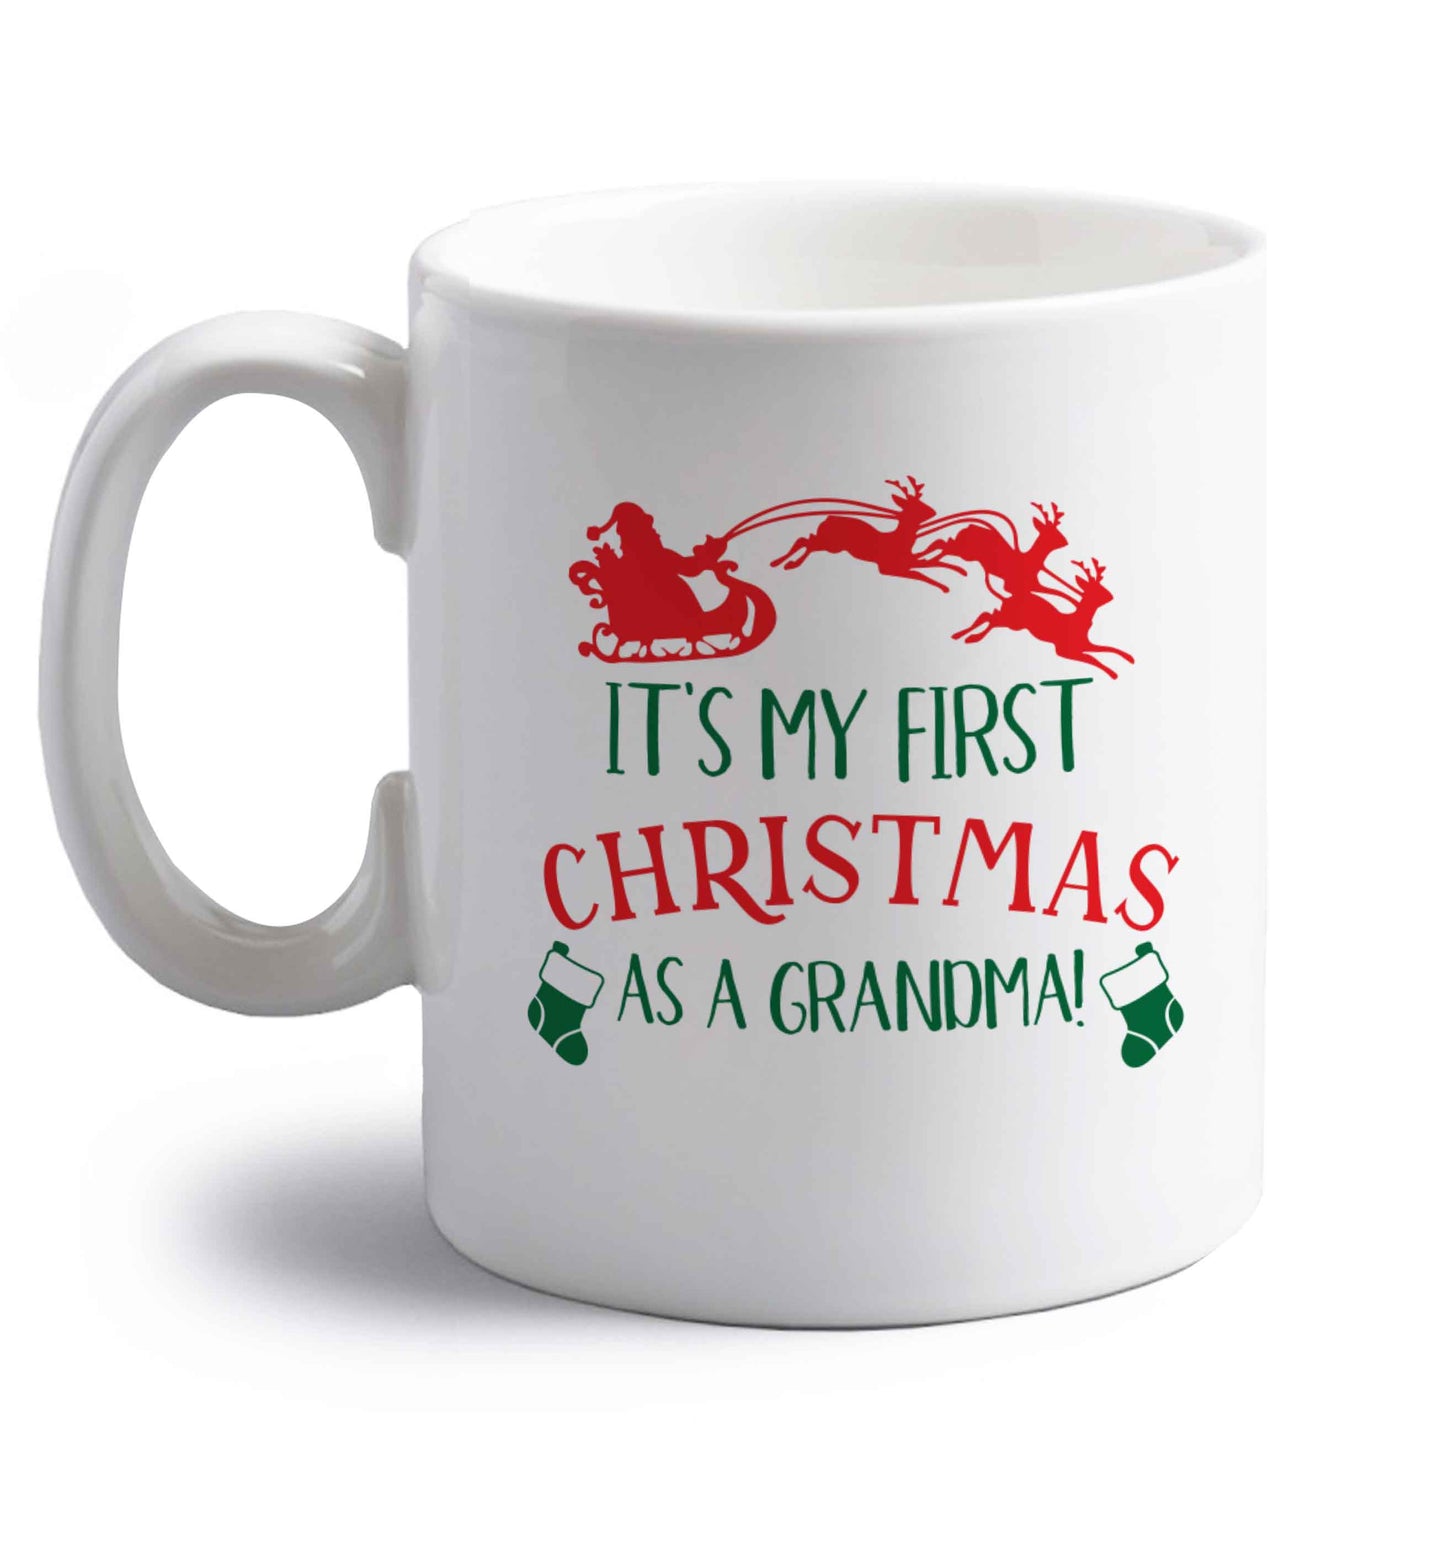 It's my first Christmas as a grandma! right handed white ceramic mug 